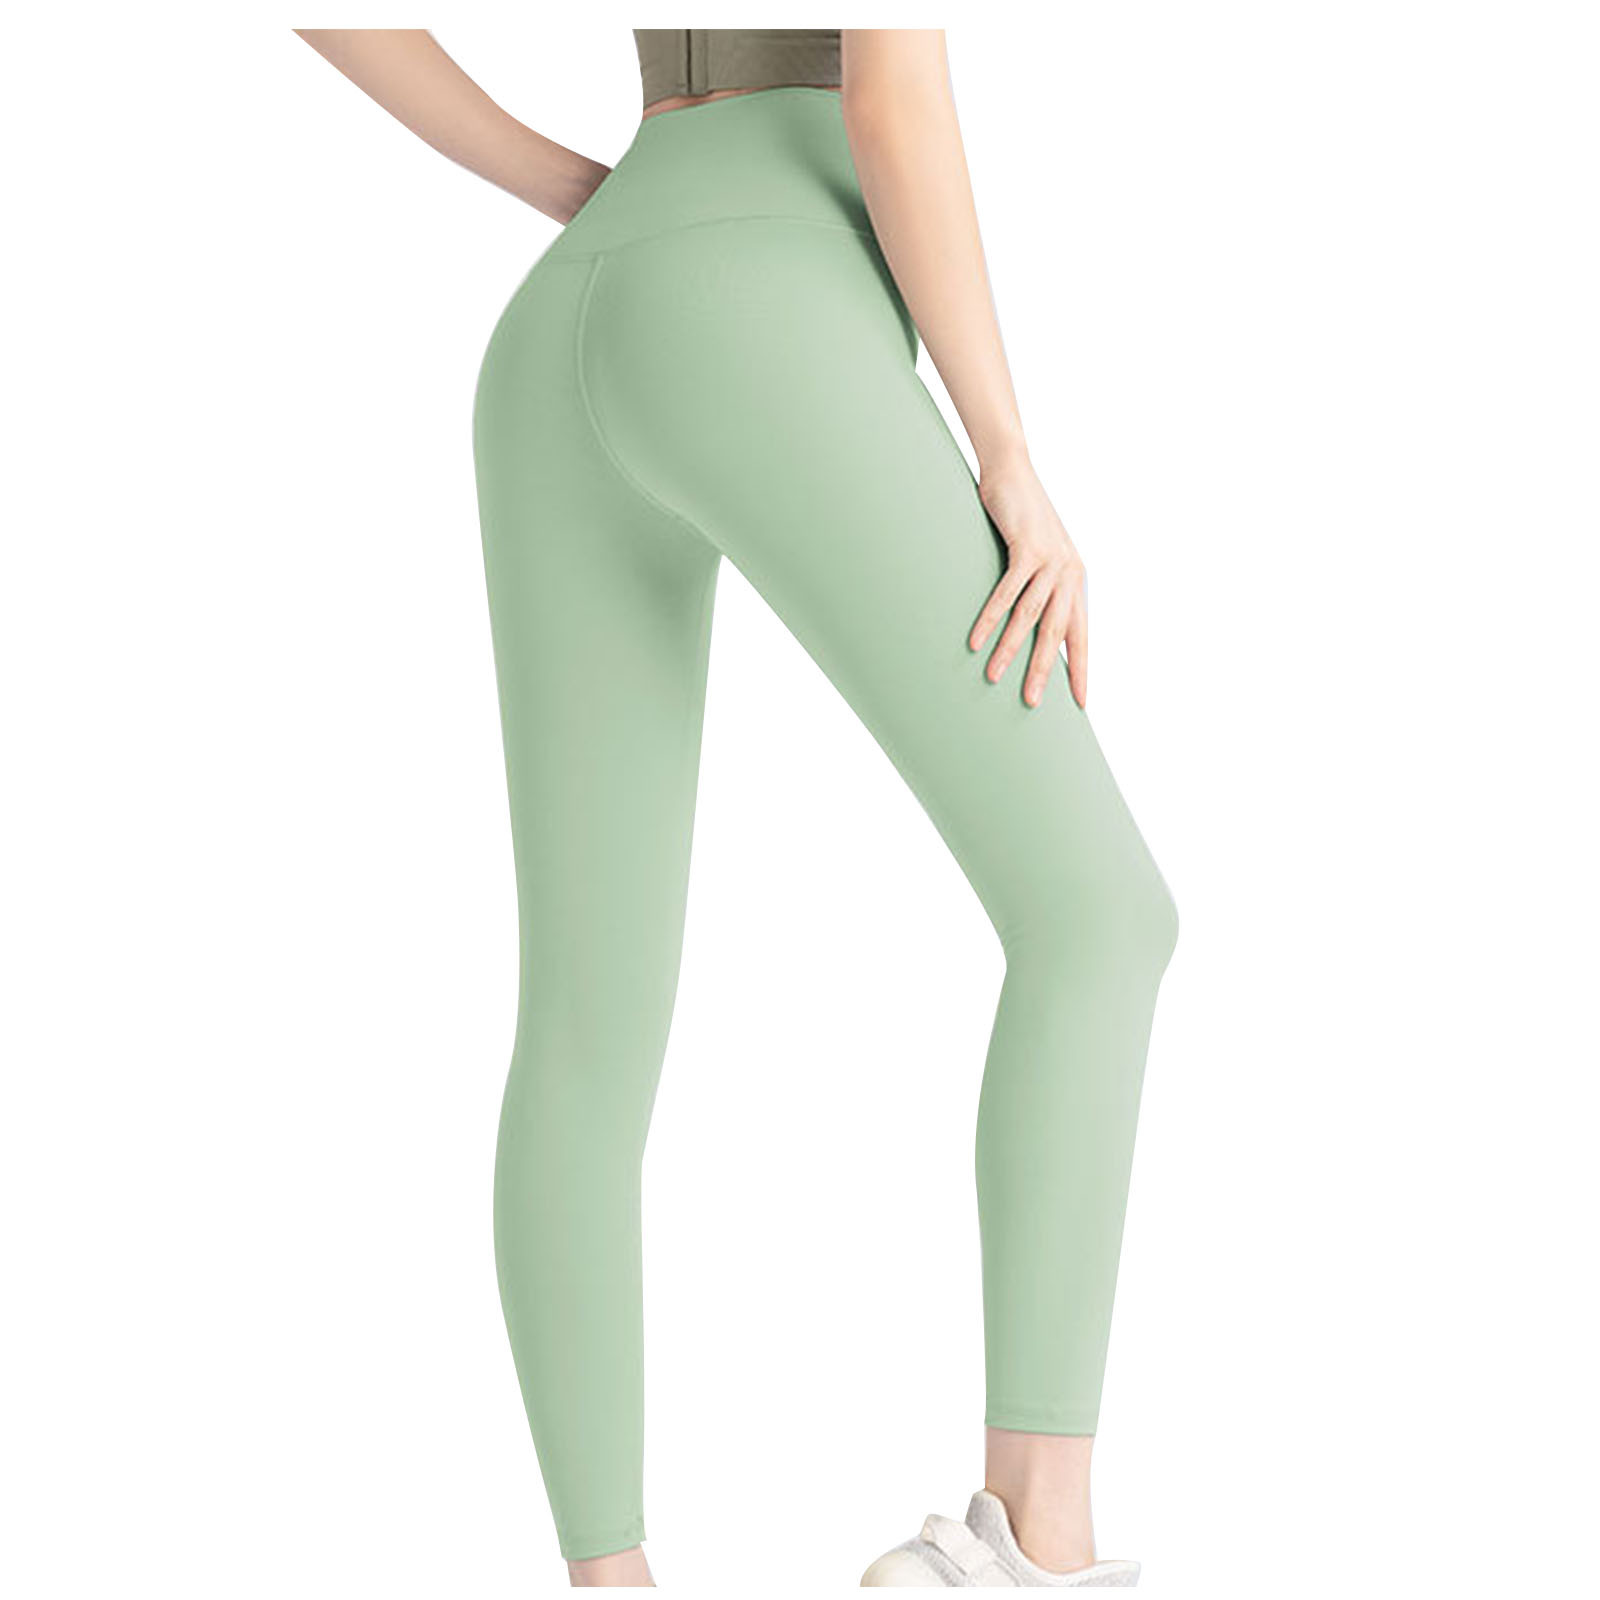 Lovzfmll Yoga Pants for Women, High Waist Slim Leg Solid Color Sport ...